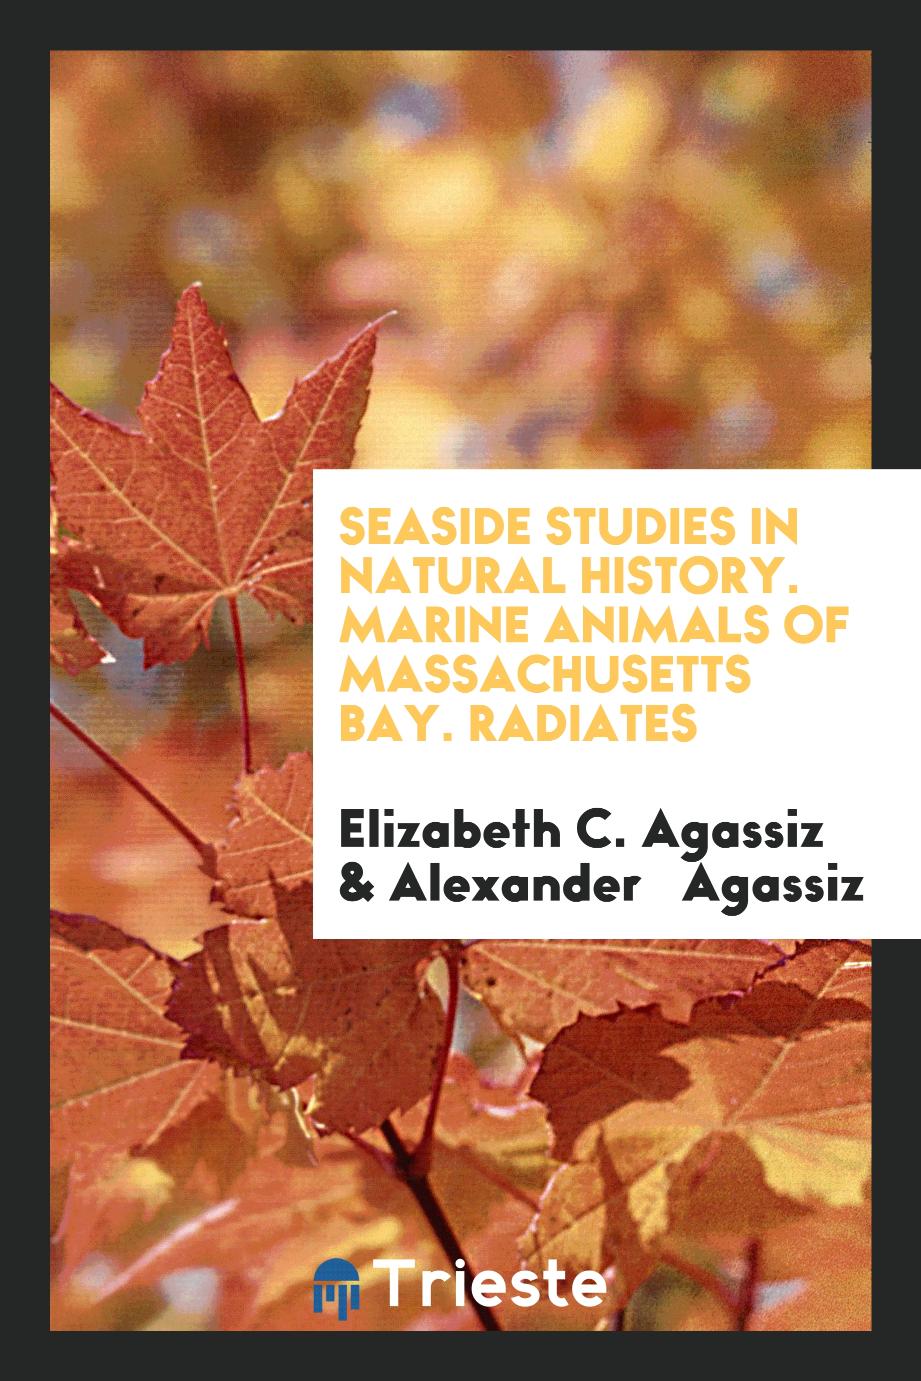 Seaside Studies in Natural History. Marine Animals of Massachusetts Bay. Radiates